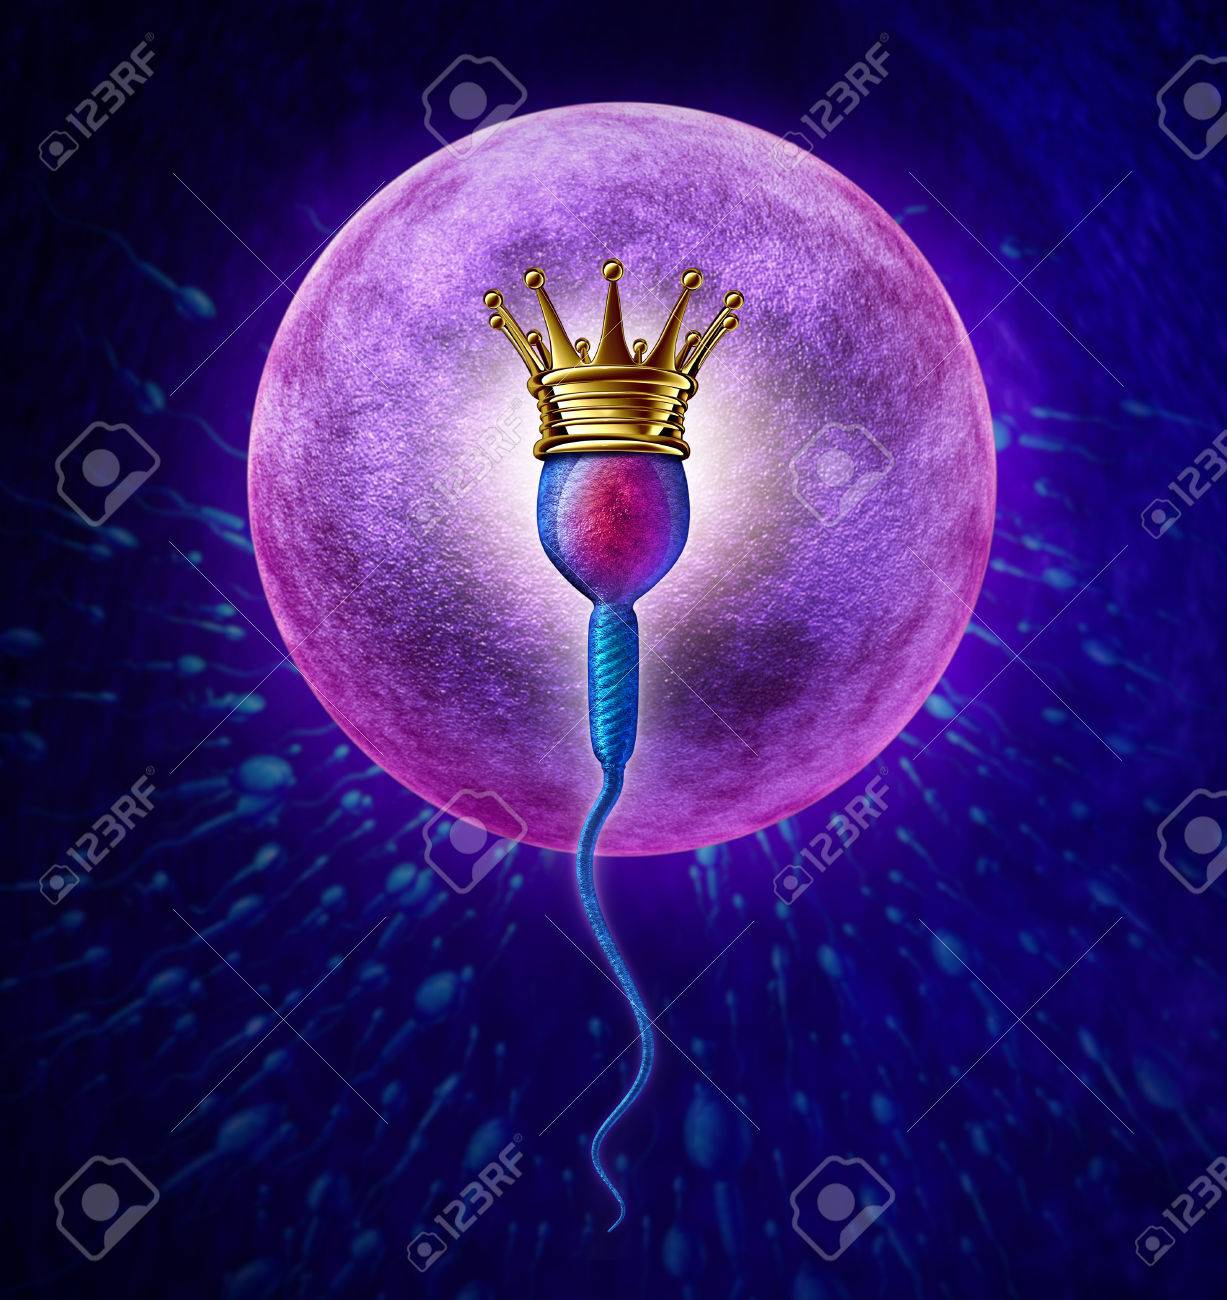 24220890-winning-sperm-human-fertility-concept-with-a-close-up-of-microscopic-sperm-or-spermatozoa-cell-weari.jpg